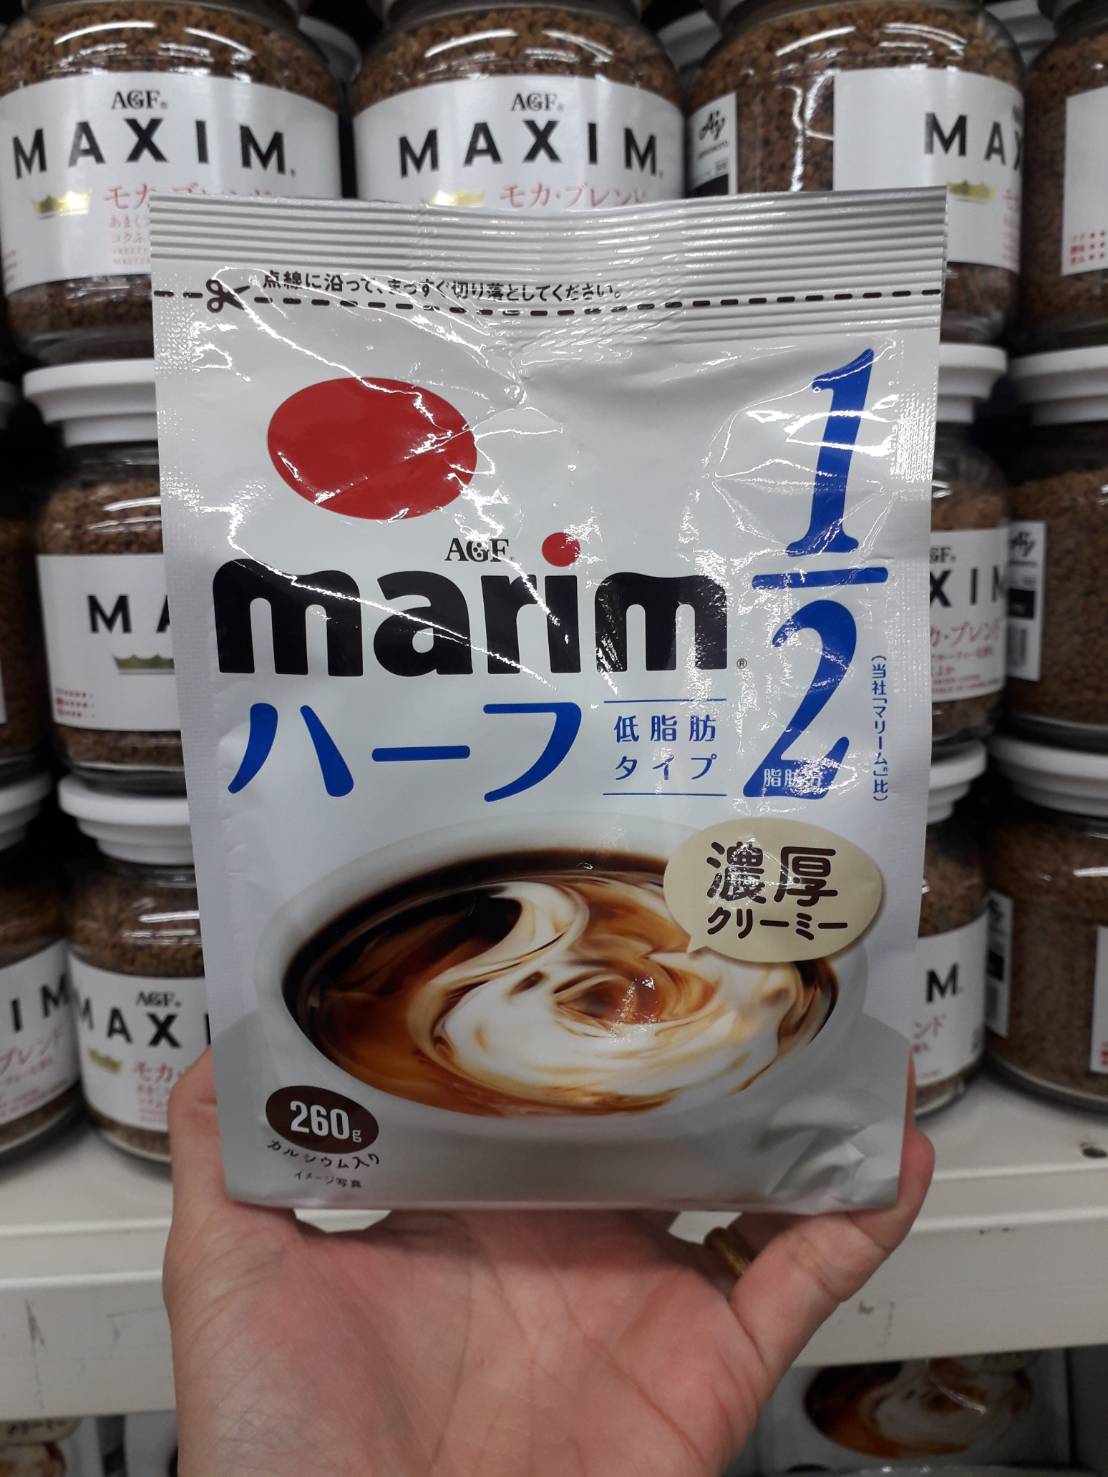 AGF Marim Cream Hokkaido milk ครีมเทียมไขมันครึ่งเดียว ผลิตจากนมวัวแท้ ฮอกไกโด 260g.